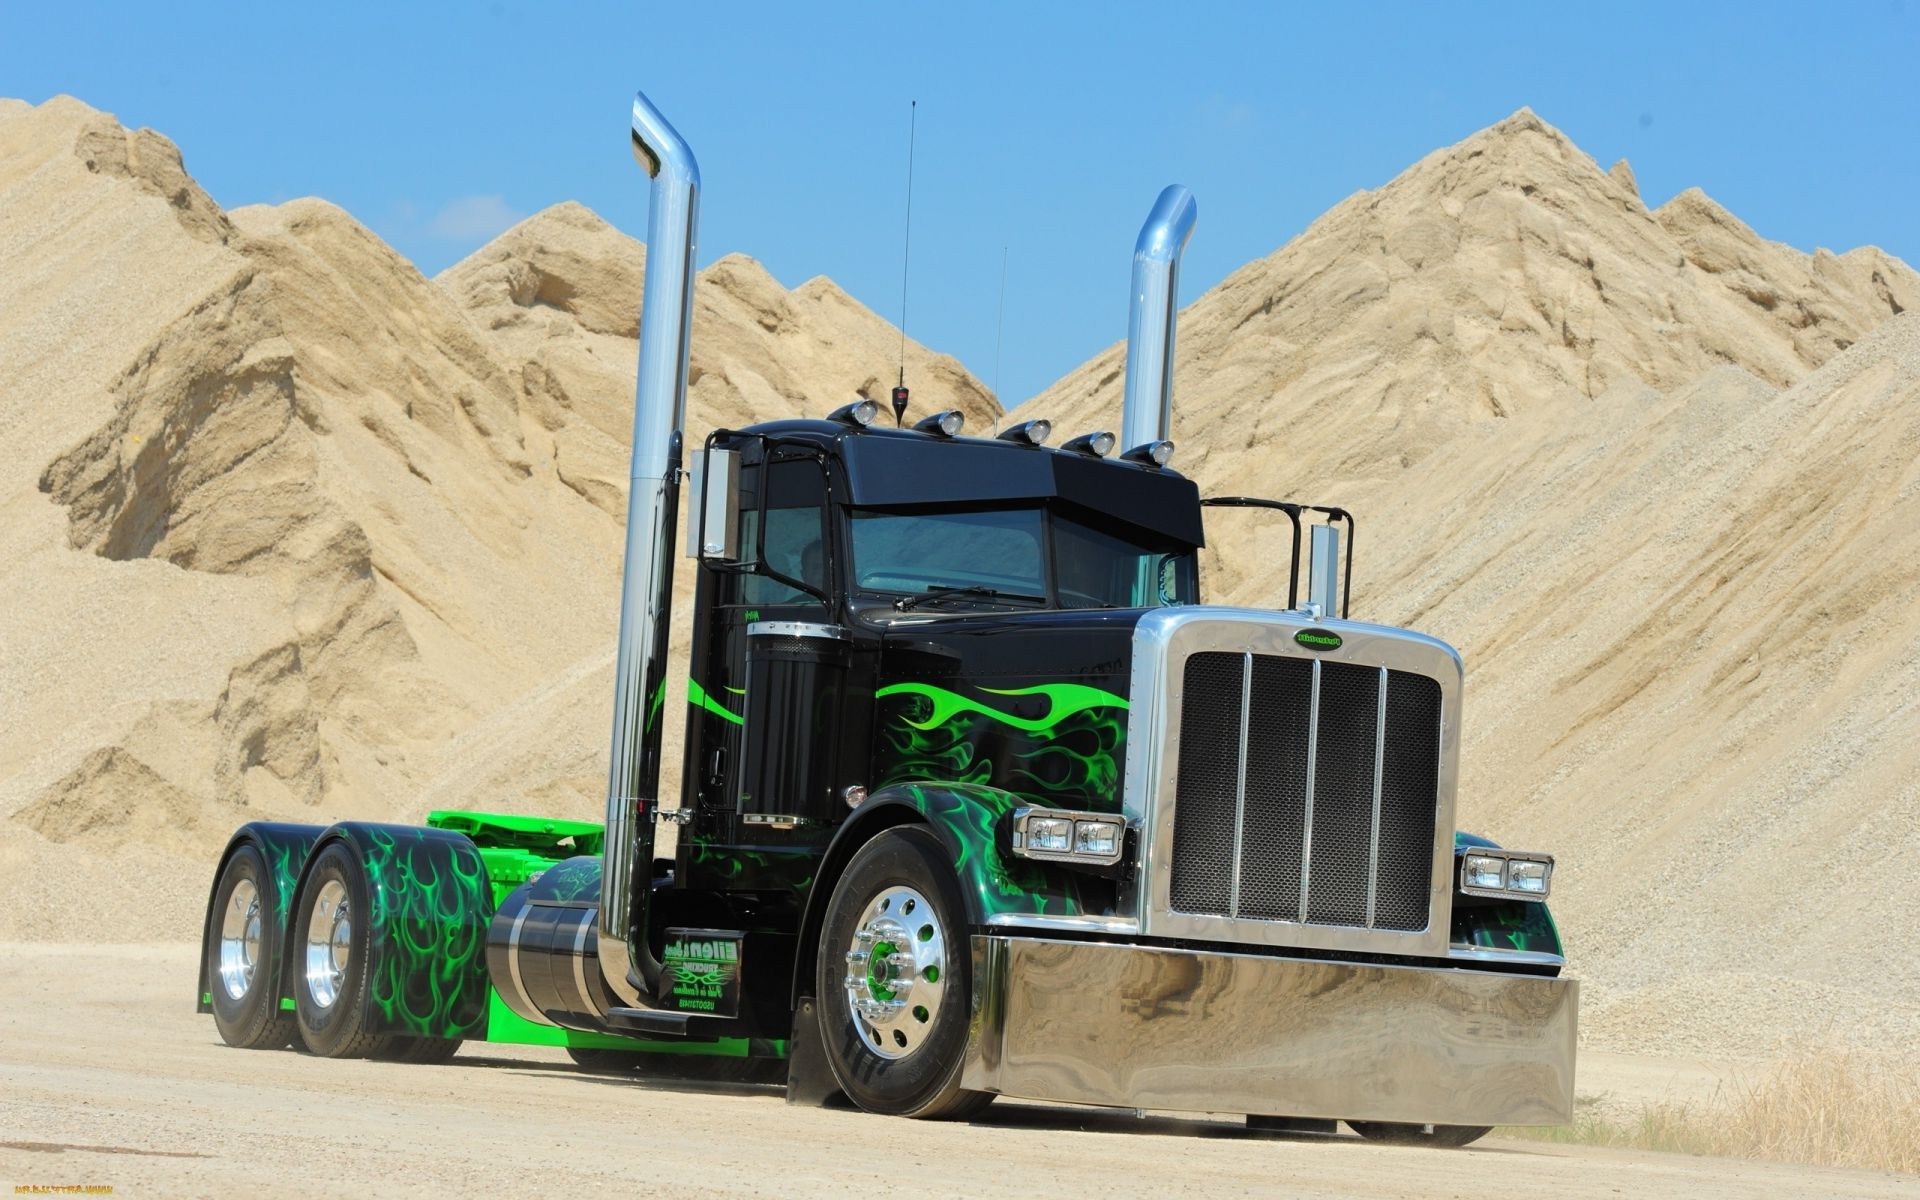 trucks vehicle truck transportation system sand machine car travel landscape industry heavy